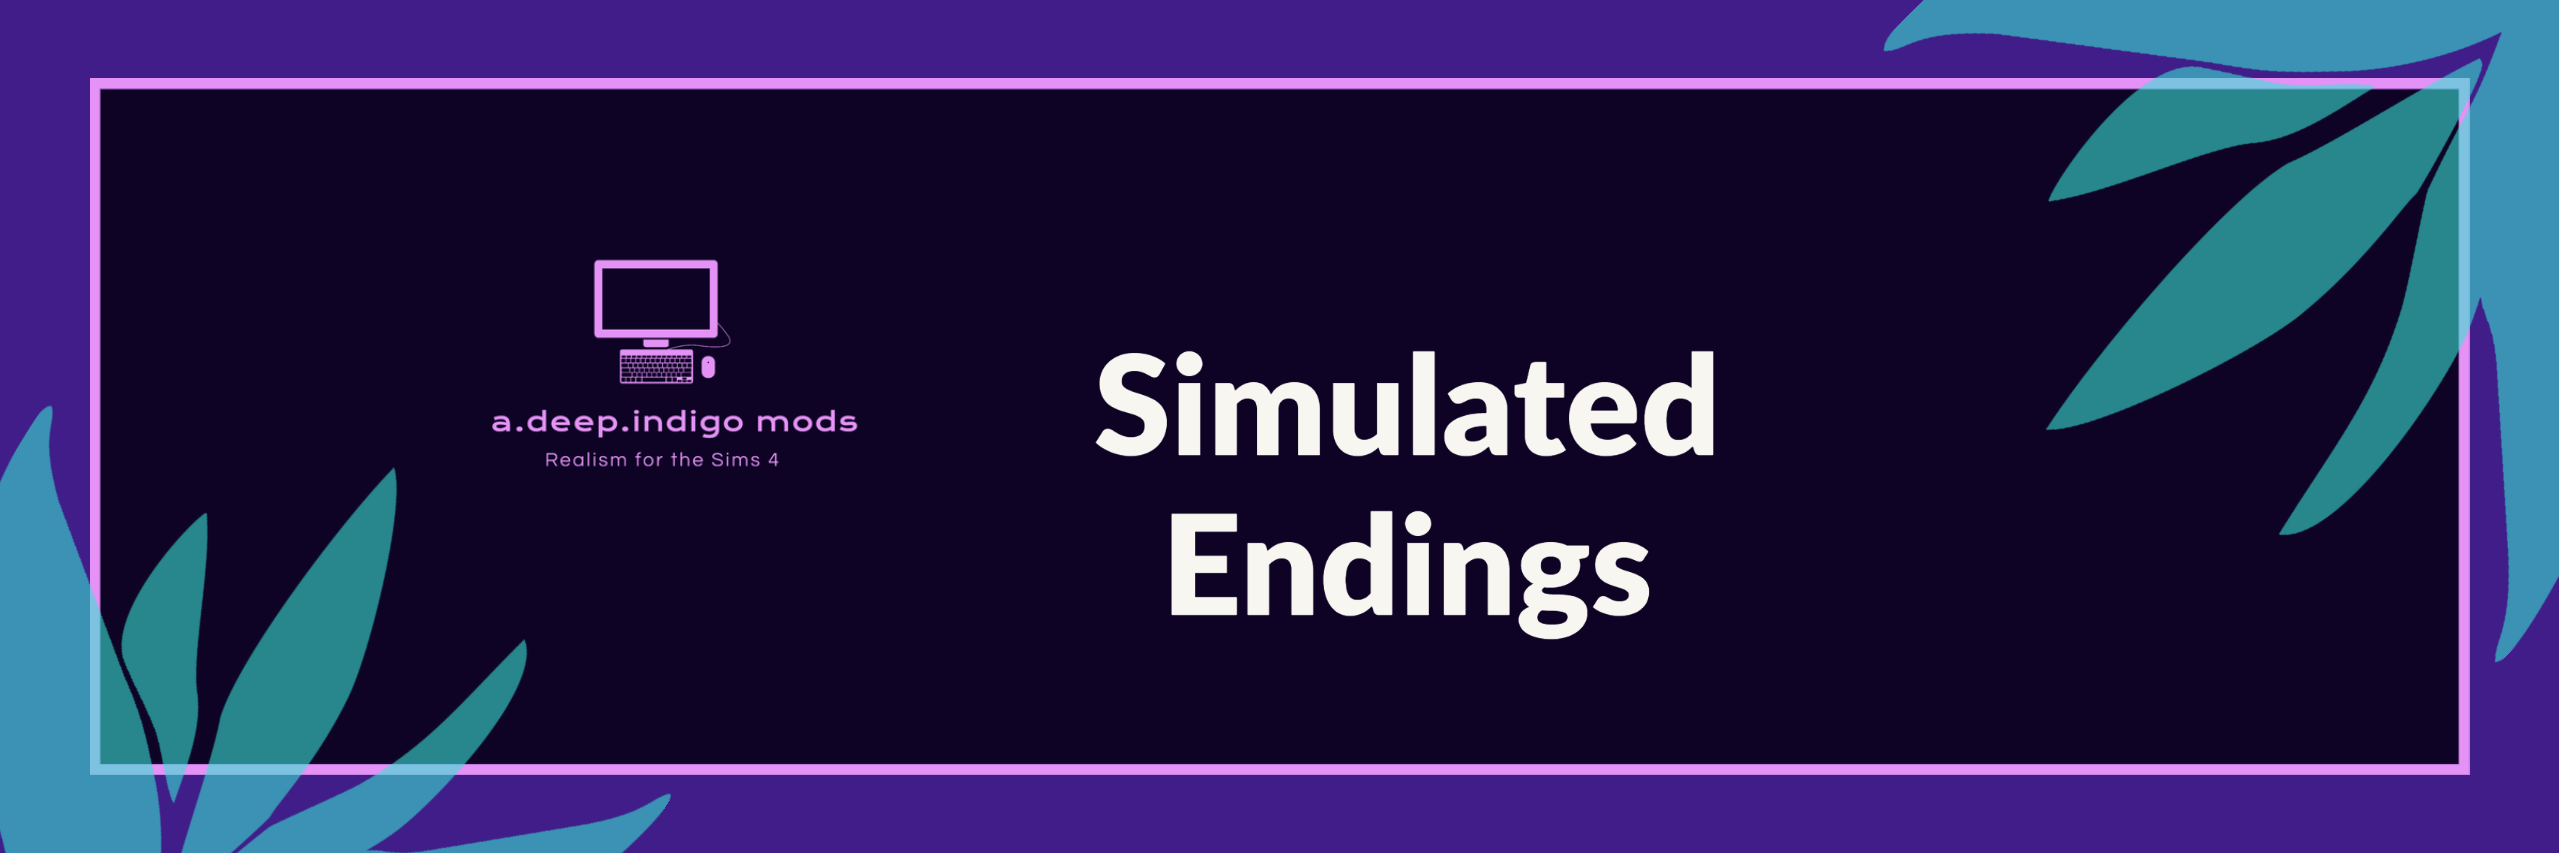 Simulated Endings